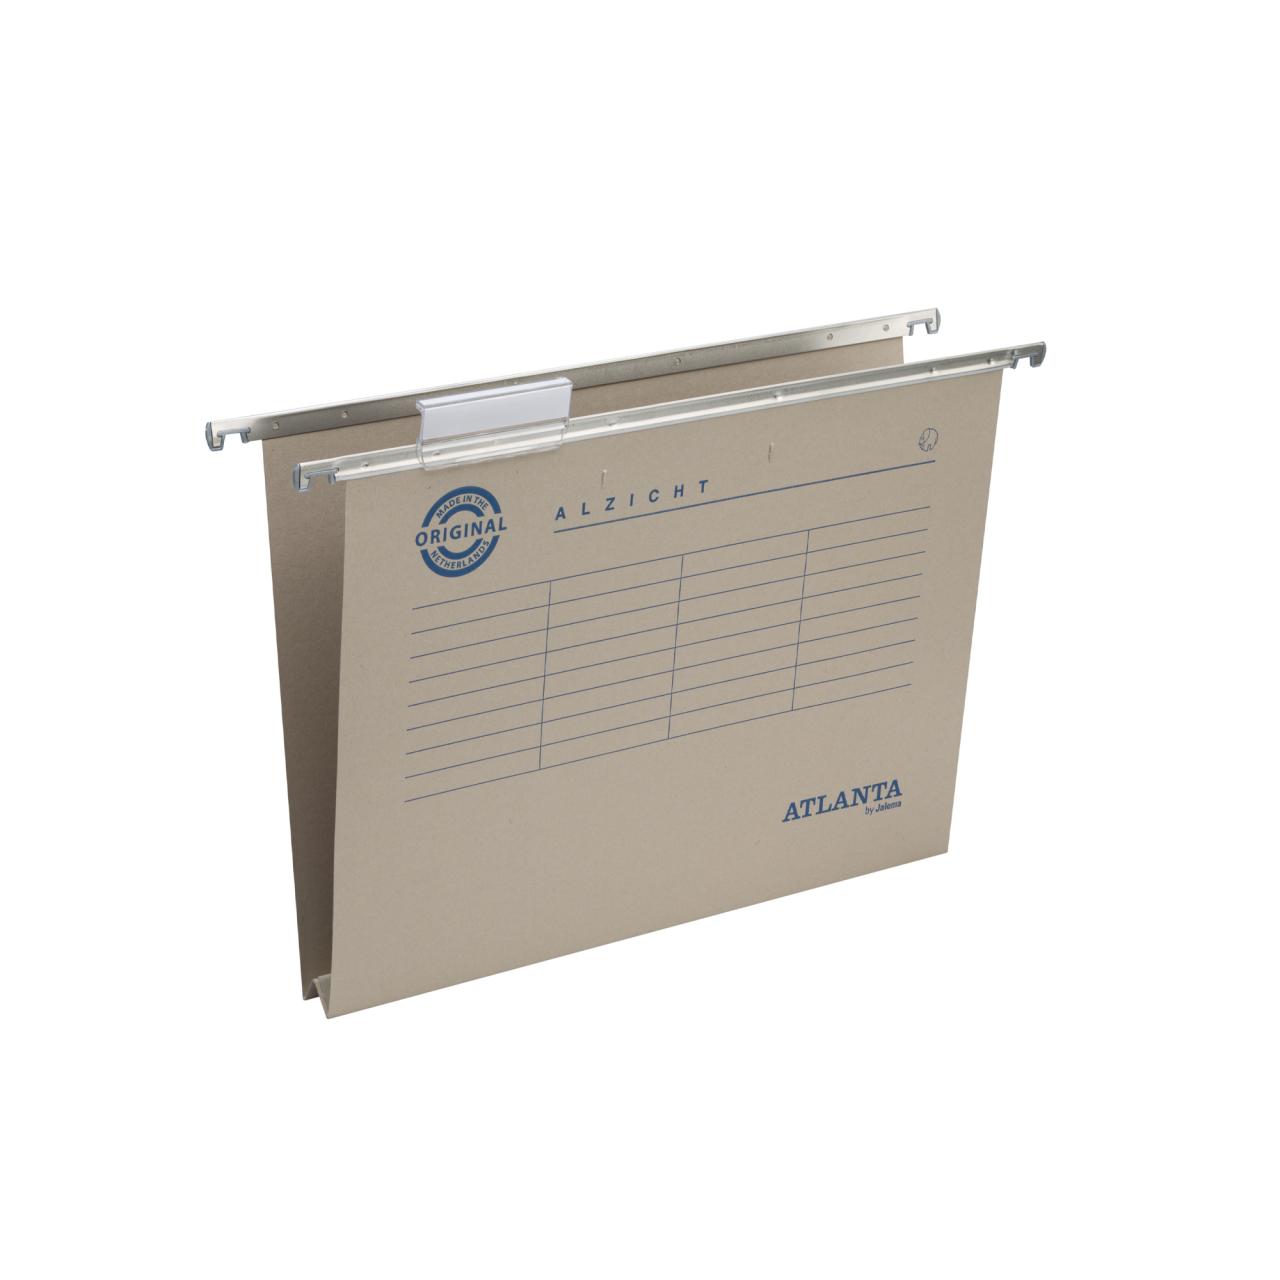 Alzicht Suspension File, A4, 30 mm, U bottom, 100% recycled cardboard, FSC® 